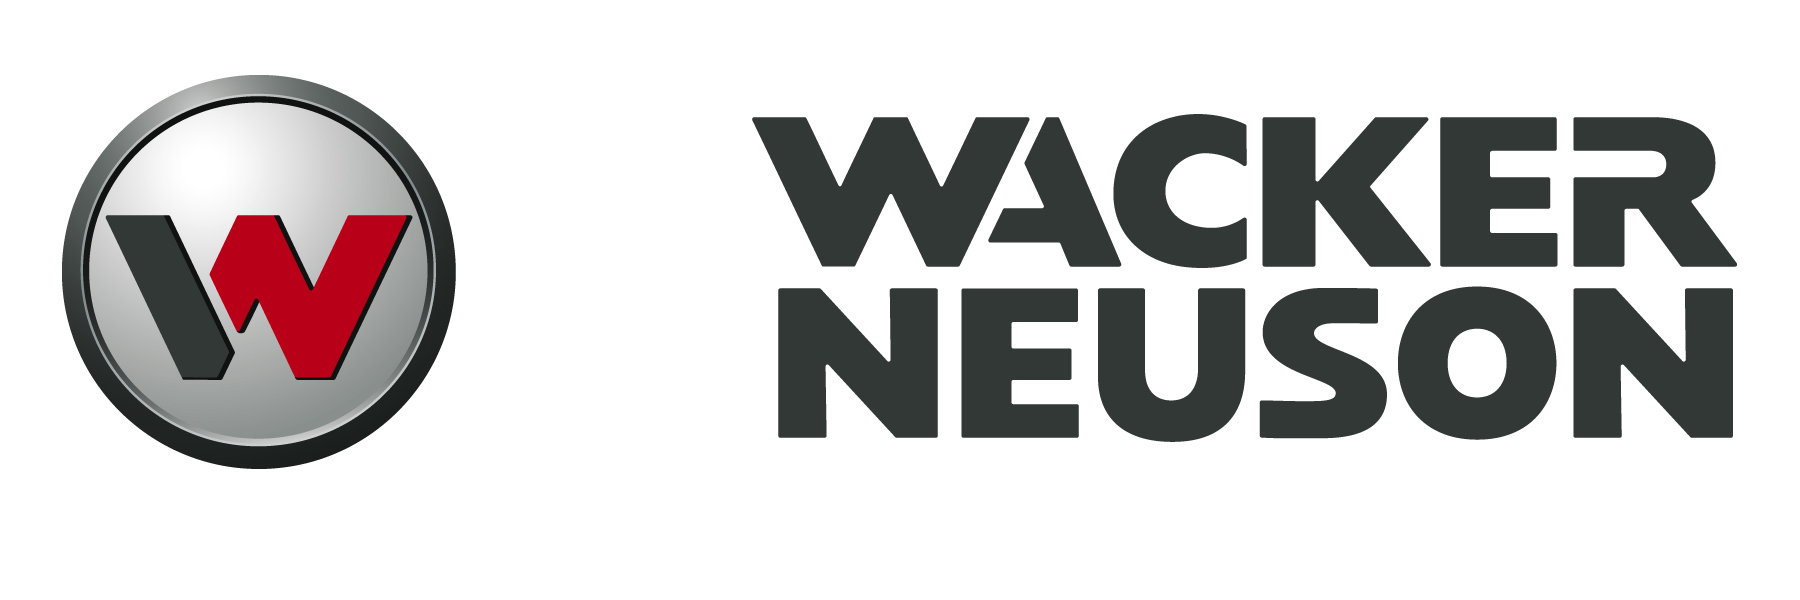 Wacker_Neuson-Logo